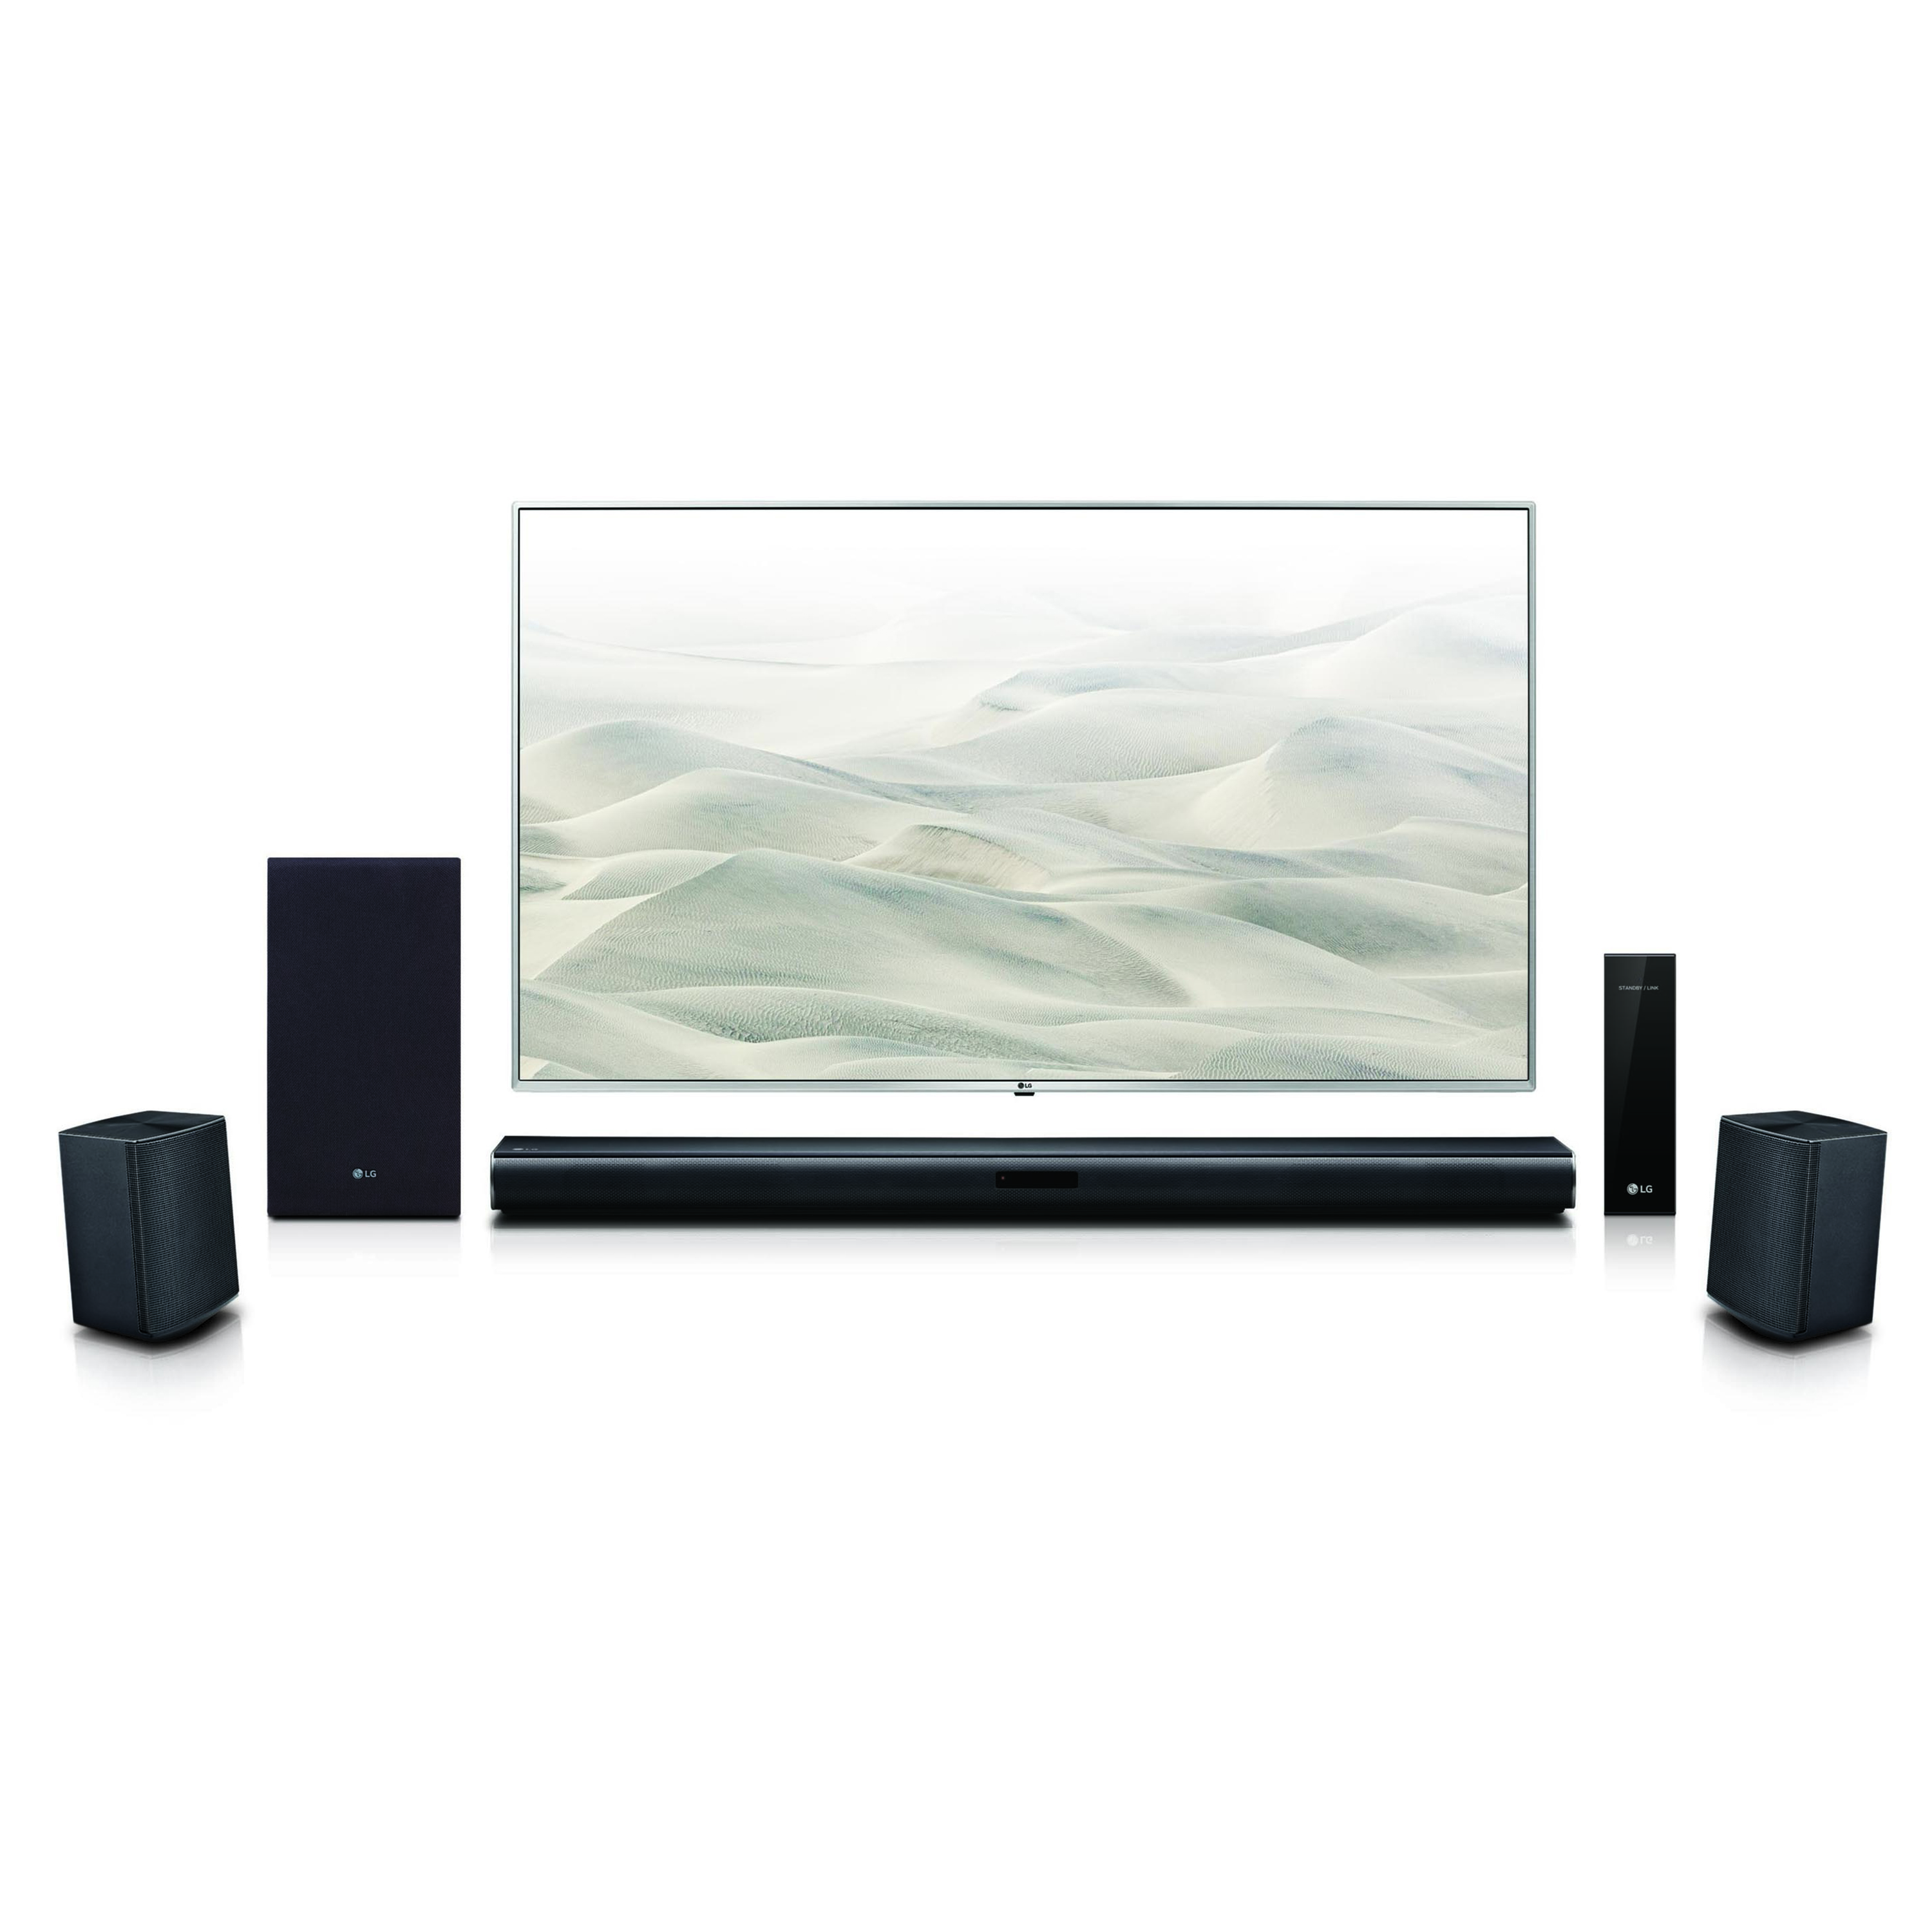 LG 4.1 Channel 420W Soundbar Surround System with Wireless Speakers - SLM3R - image 2 of 19